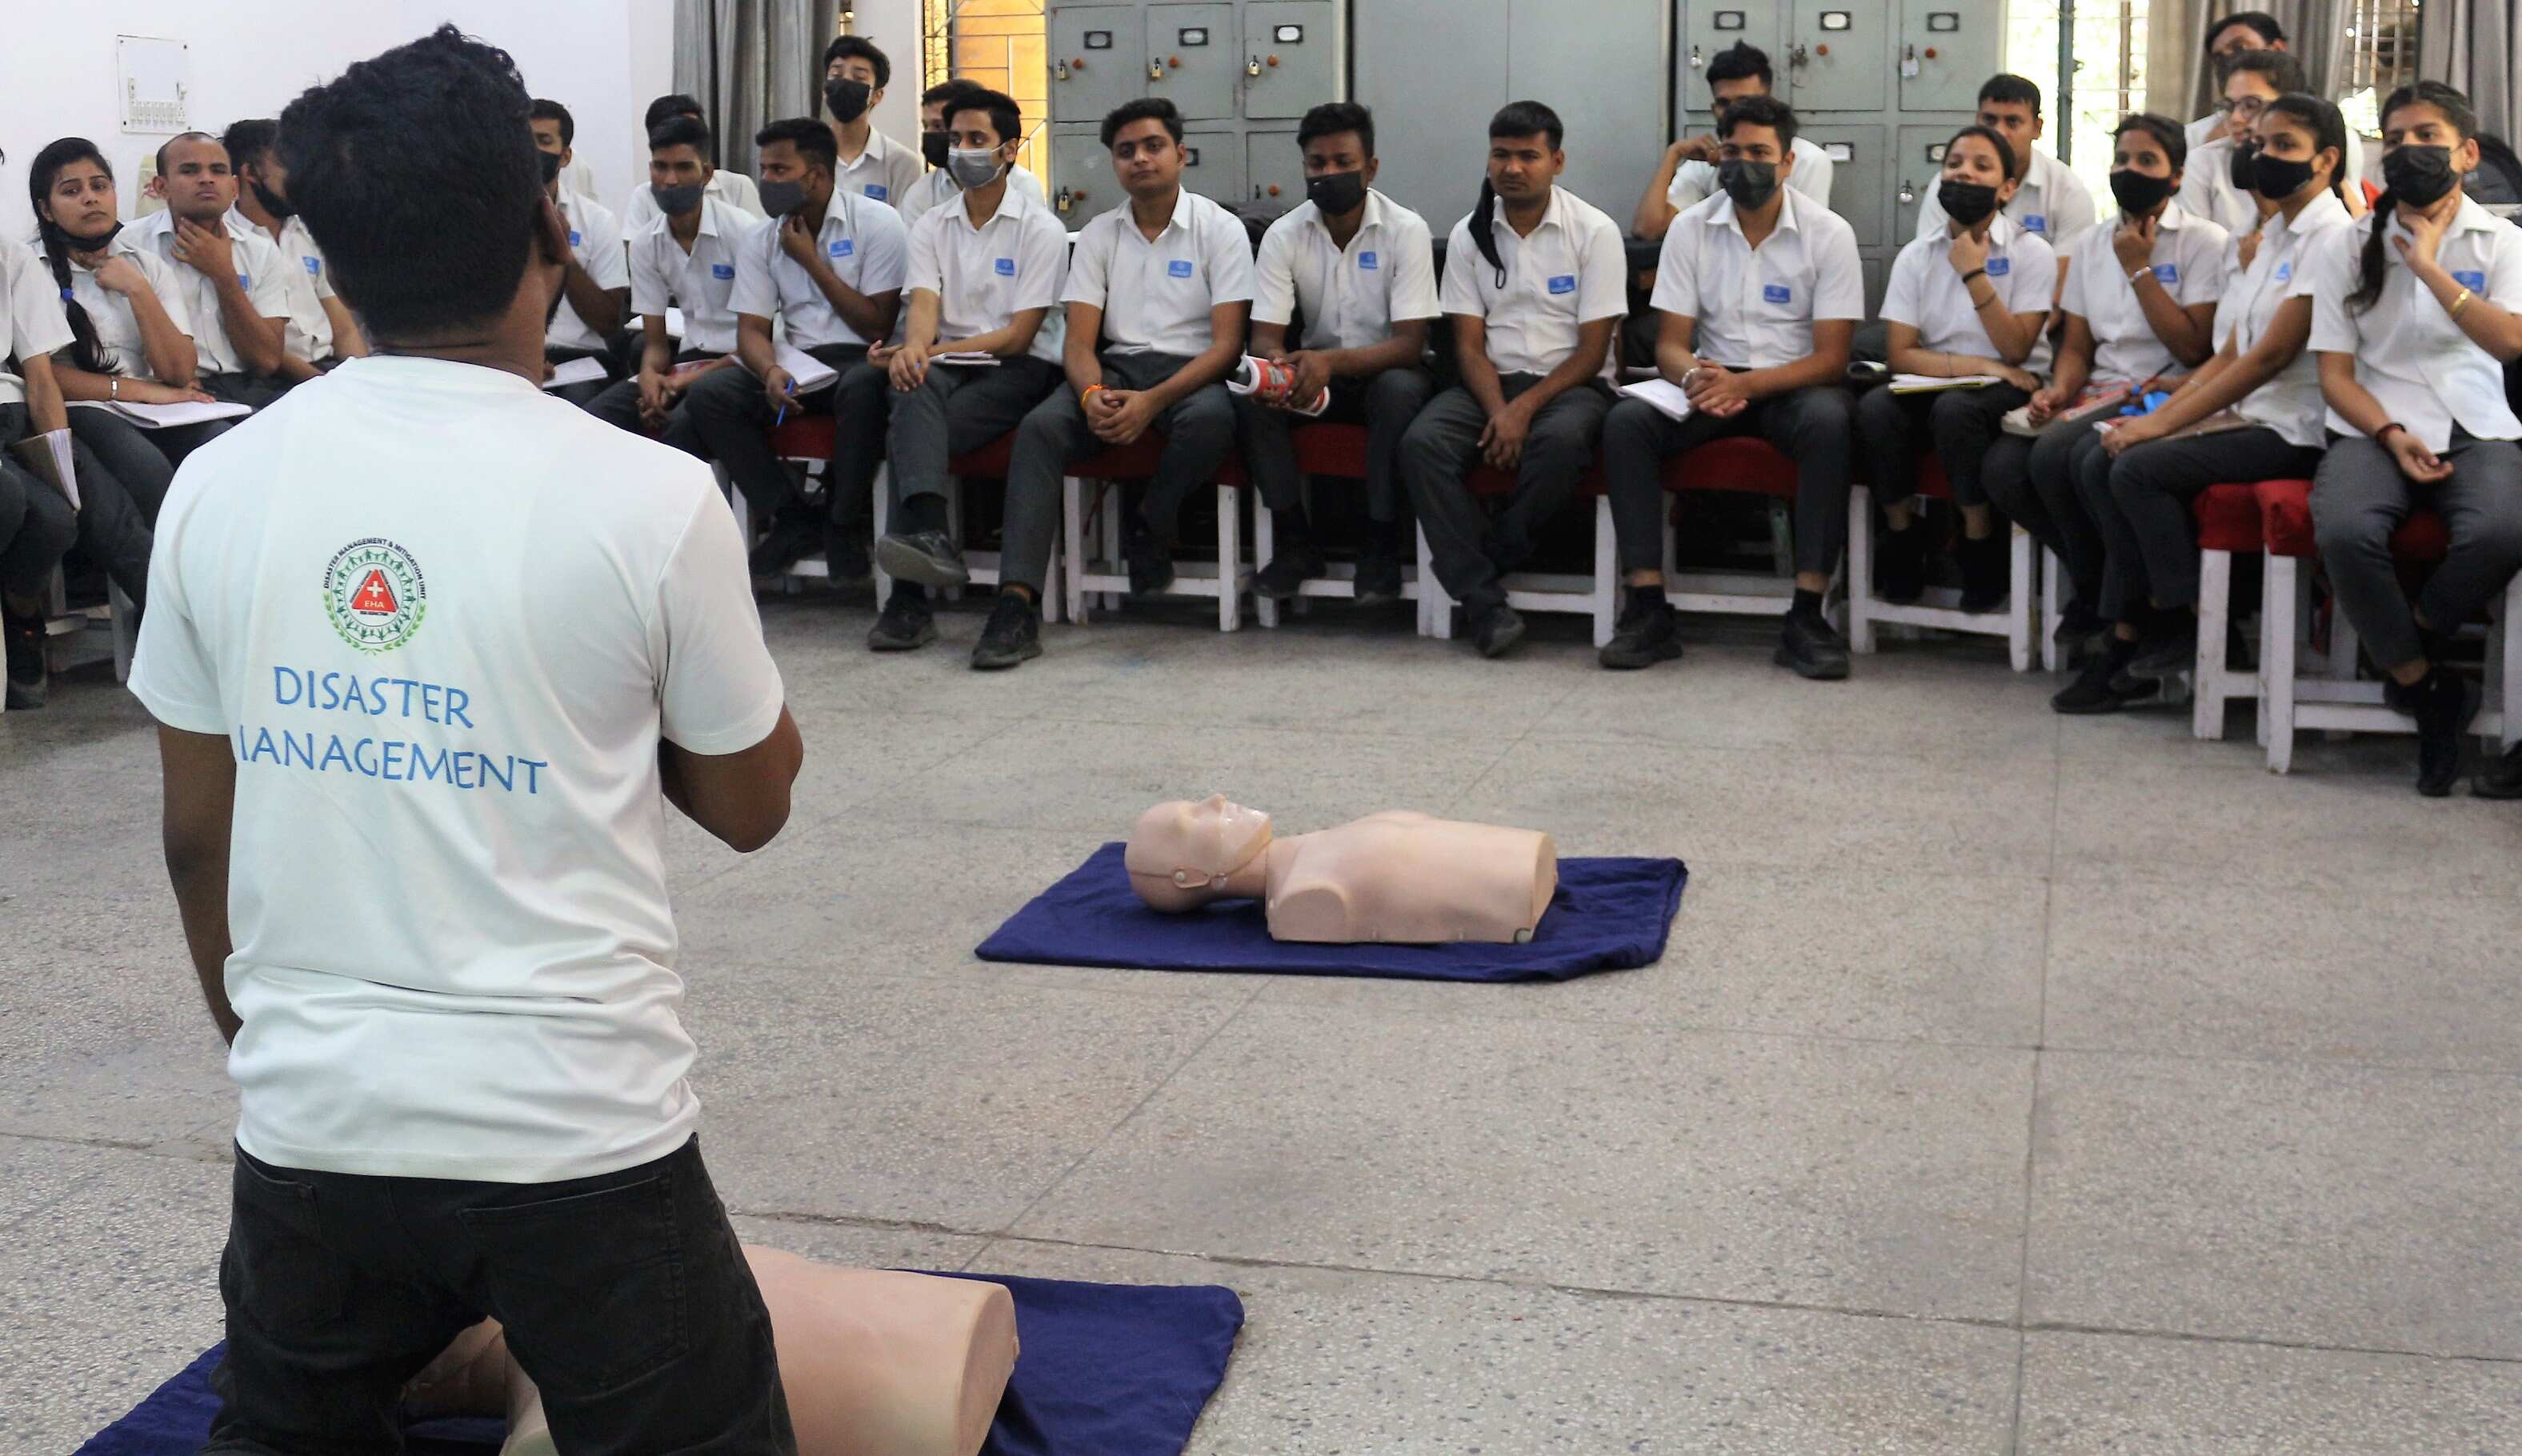 Training student on lifesaving skills